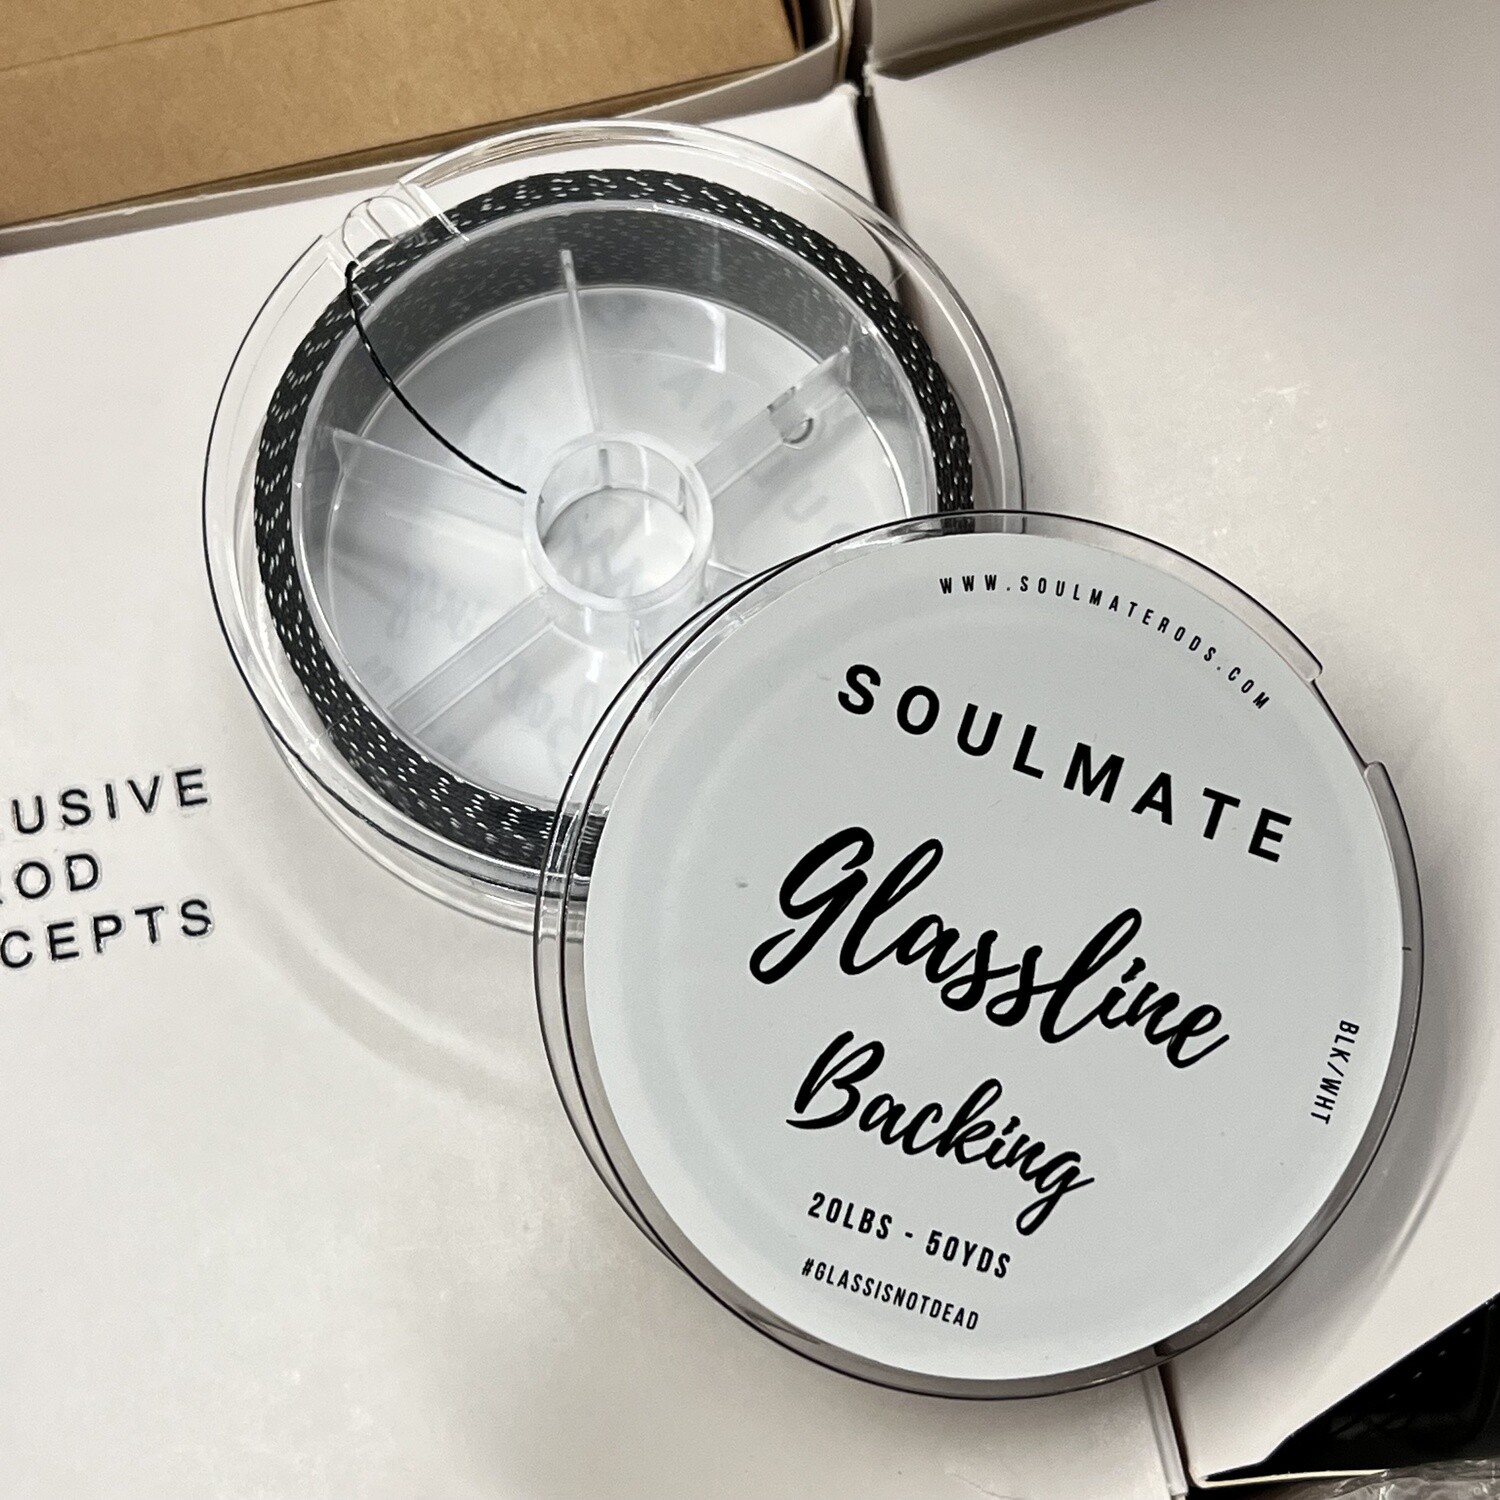 Soulmate Glassline 20lbs Backing 50yards black/white